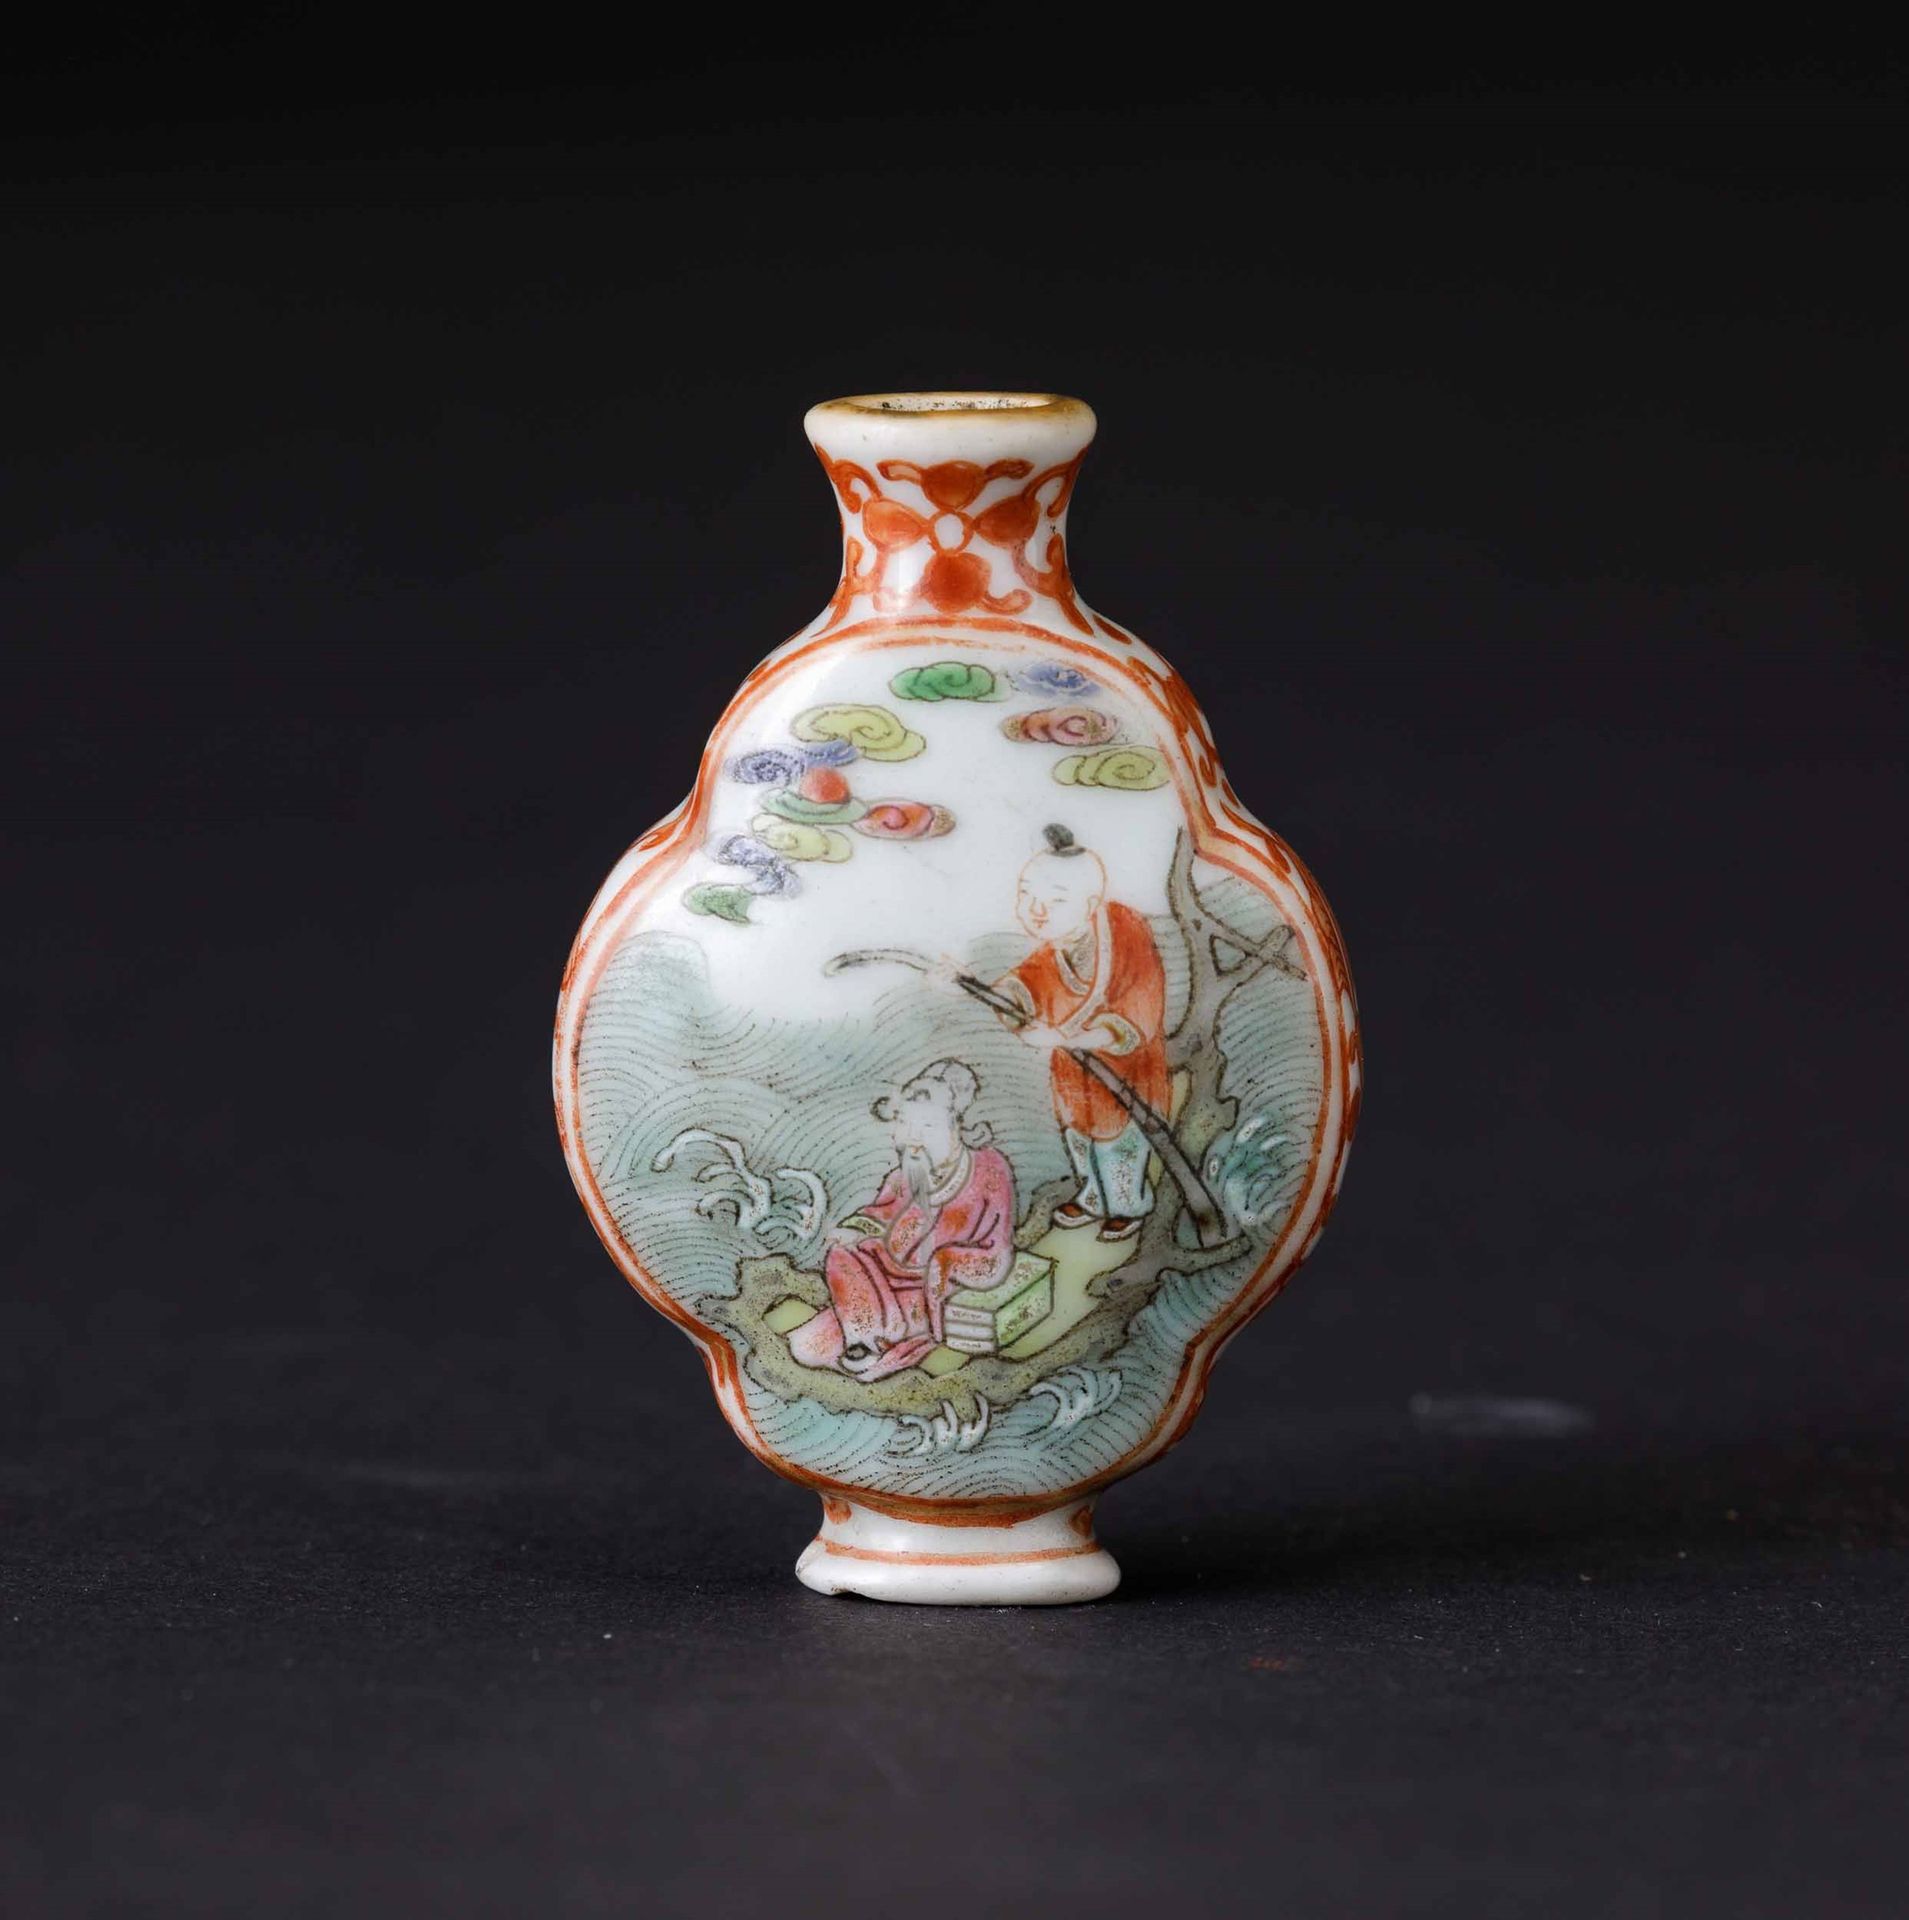 A porcelain snuff bottle, China, Qing Dynasty 嘉庆时期（1796-1820）。高6厘米